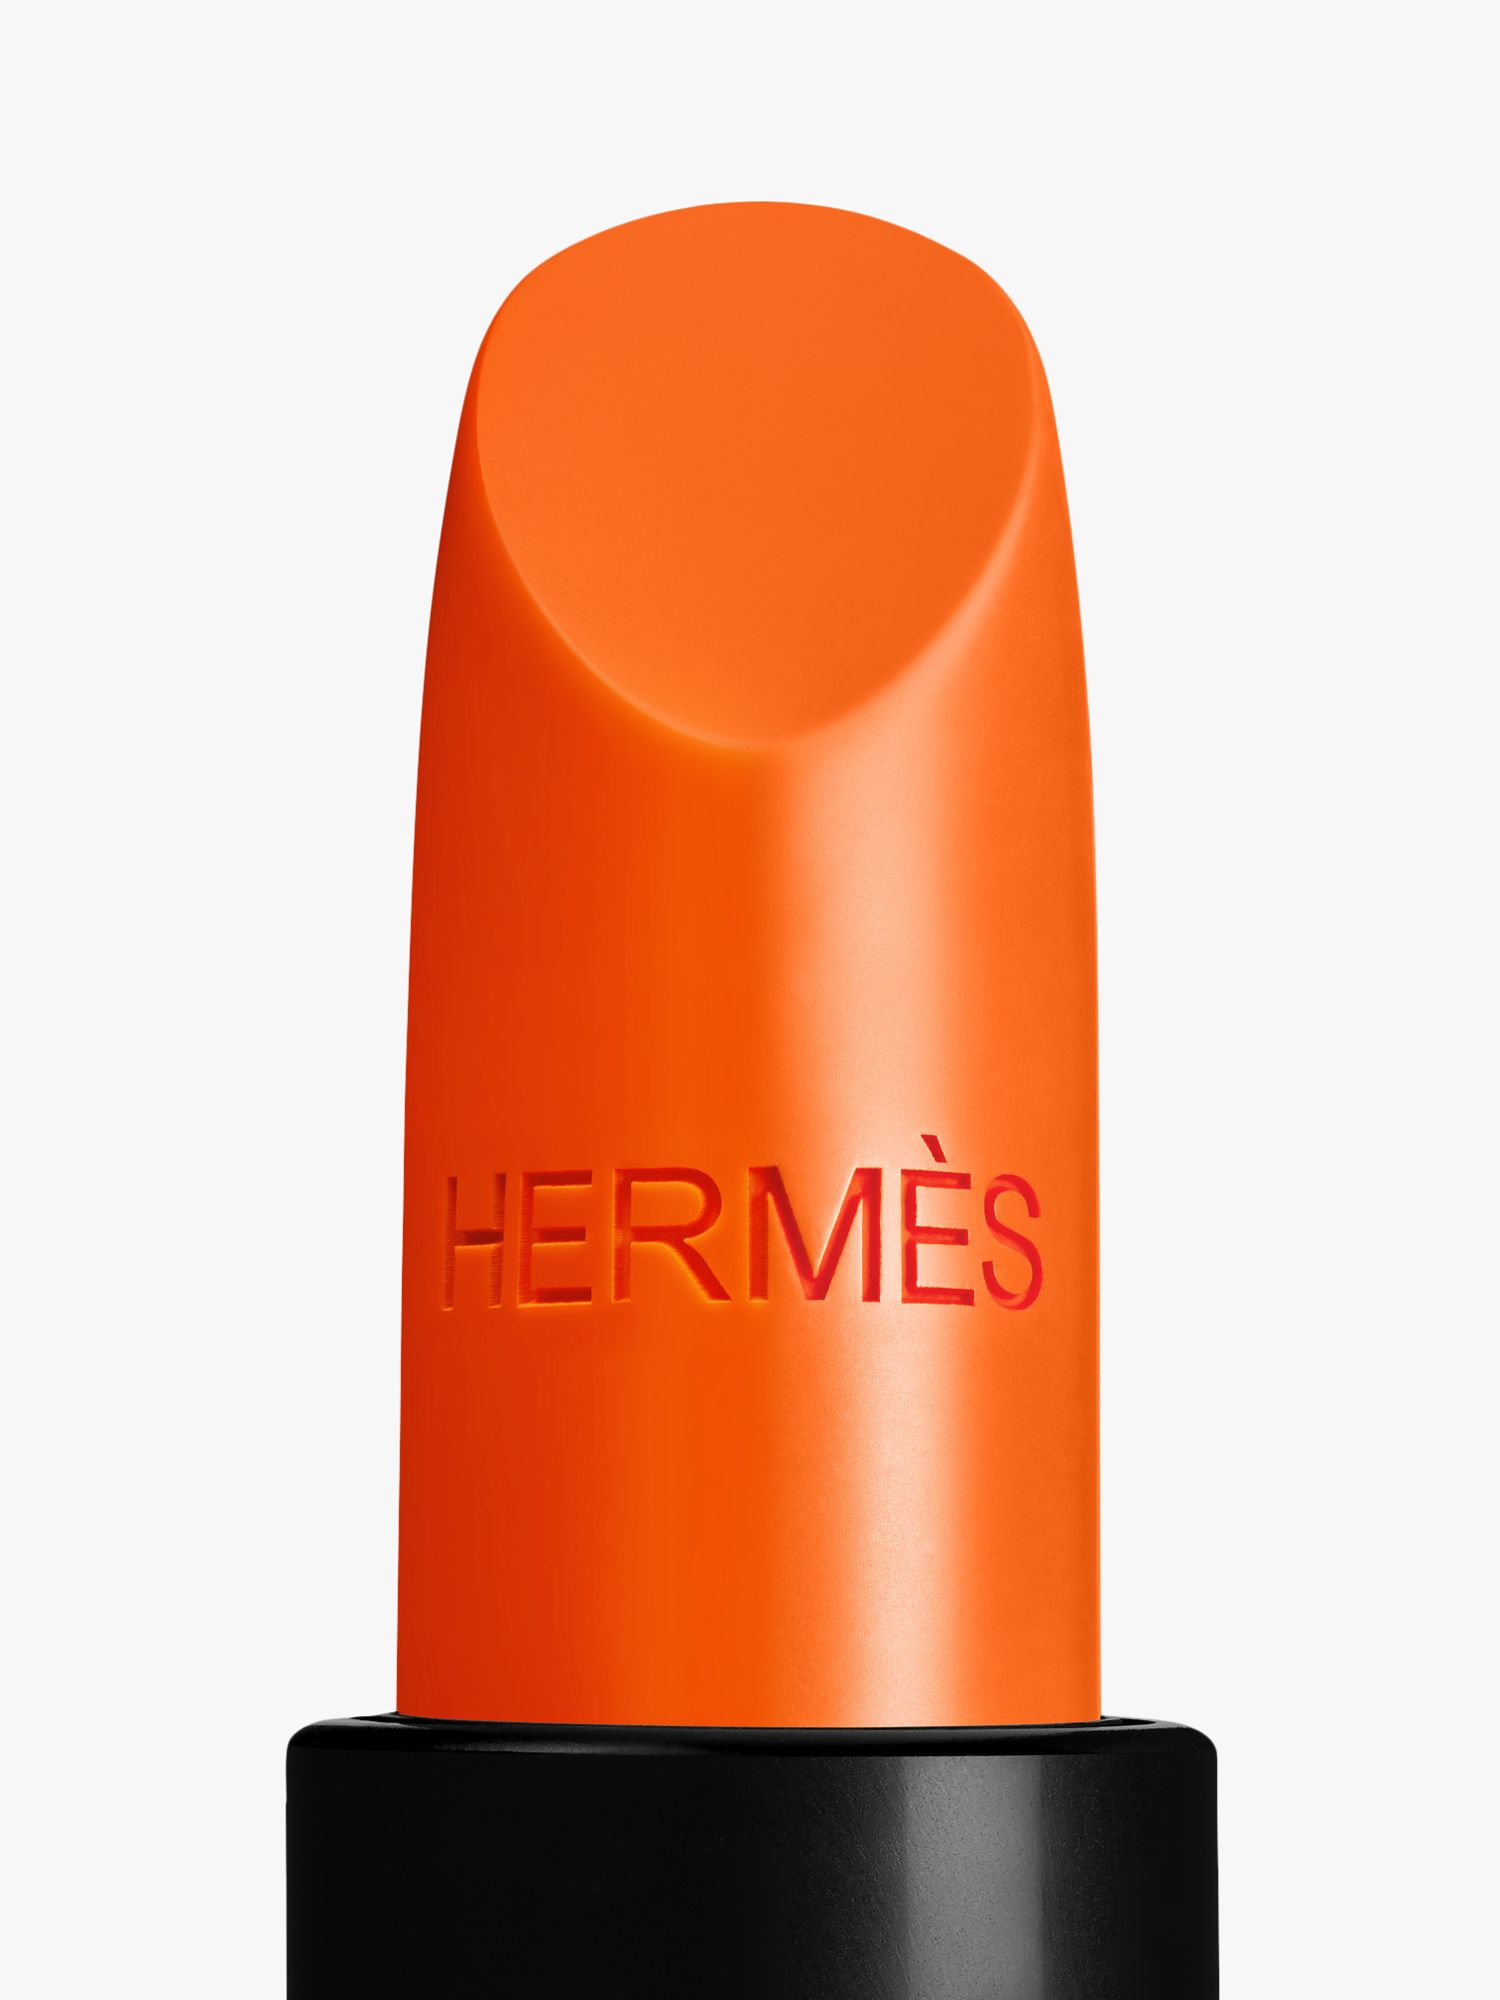 Hermès Rouge Hermès Satin Lipstick, 33 Orange Boîte 5